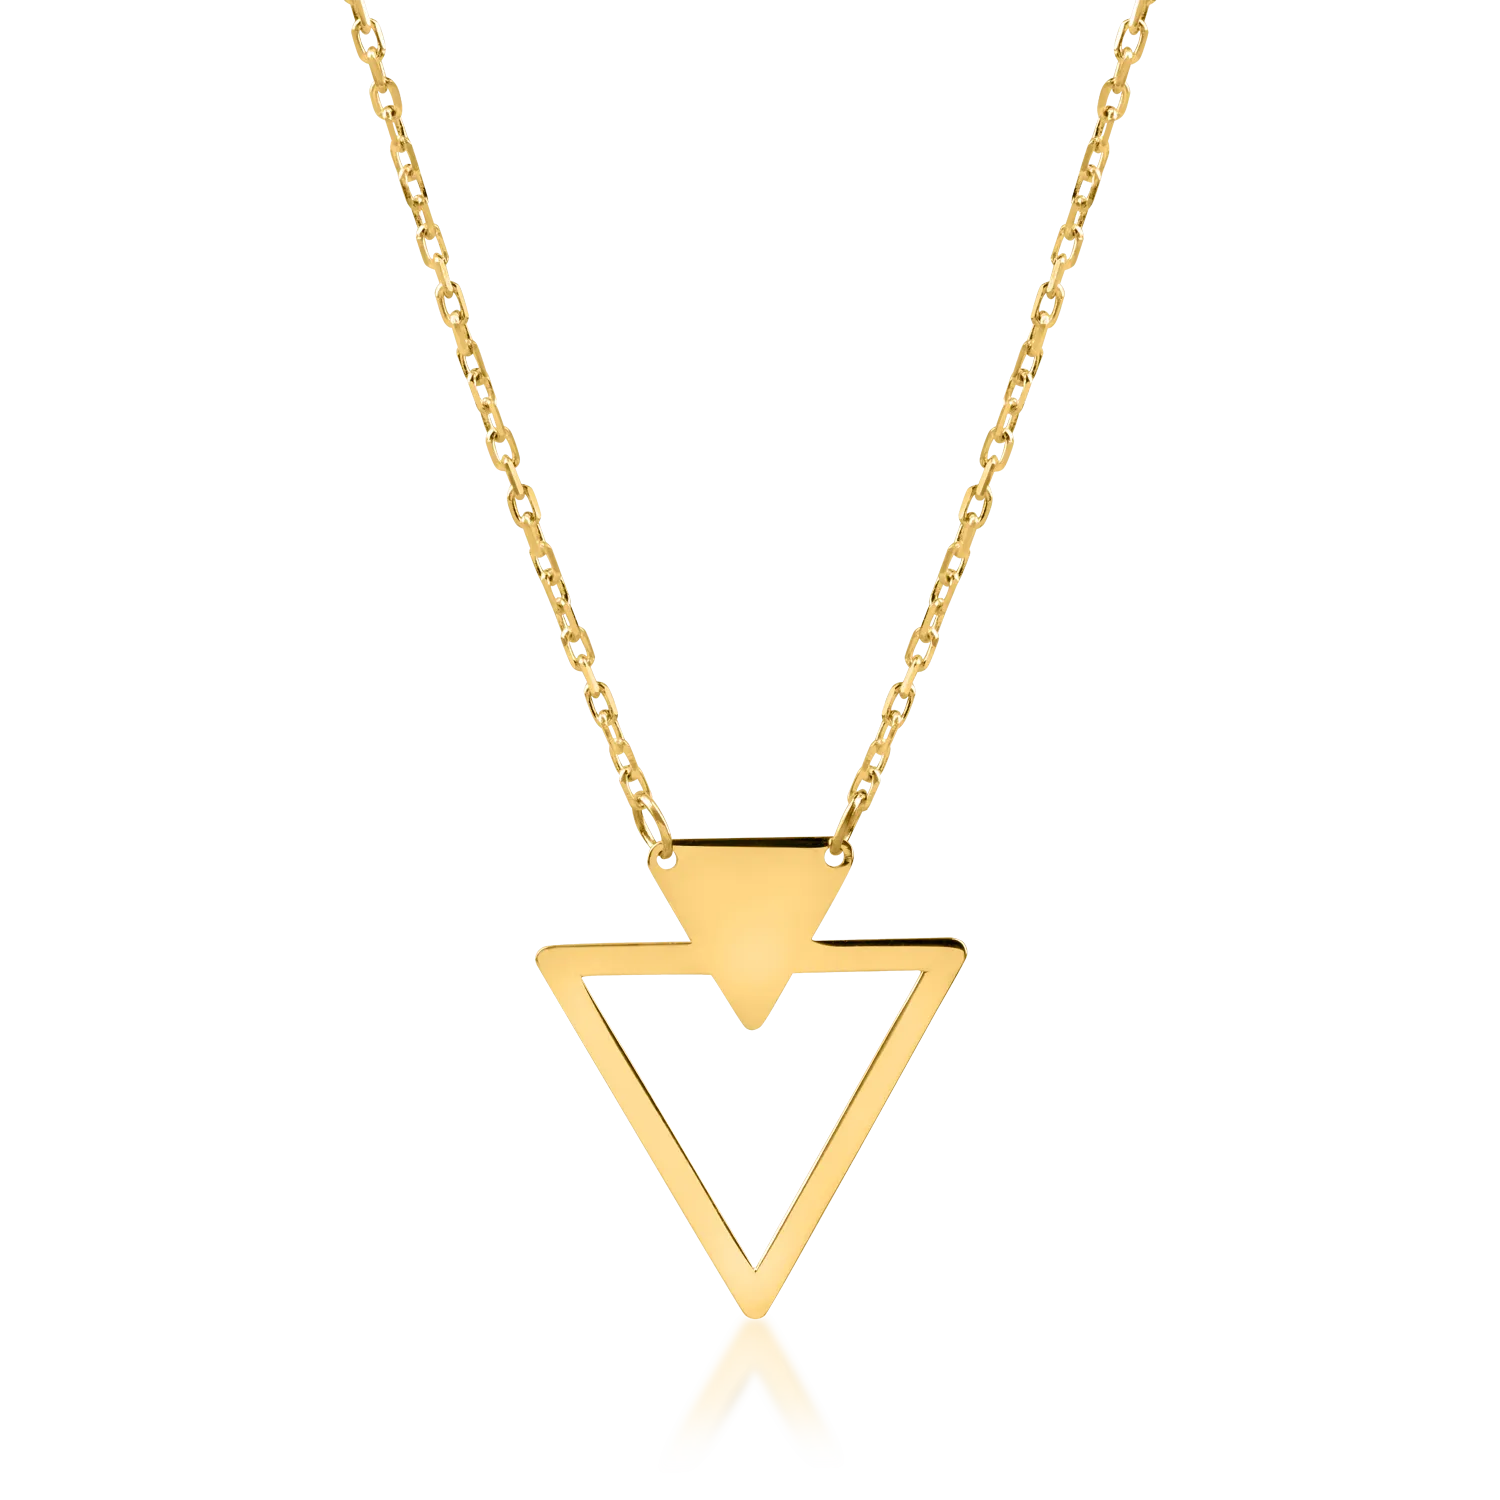 Yellow gold geometric pendant necklace